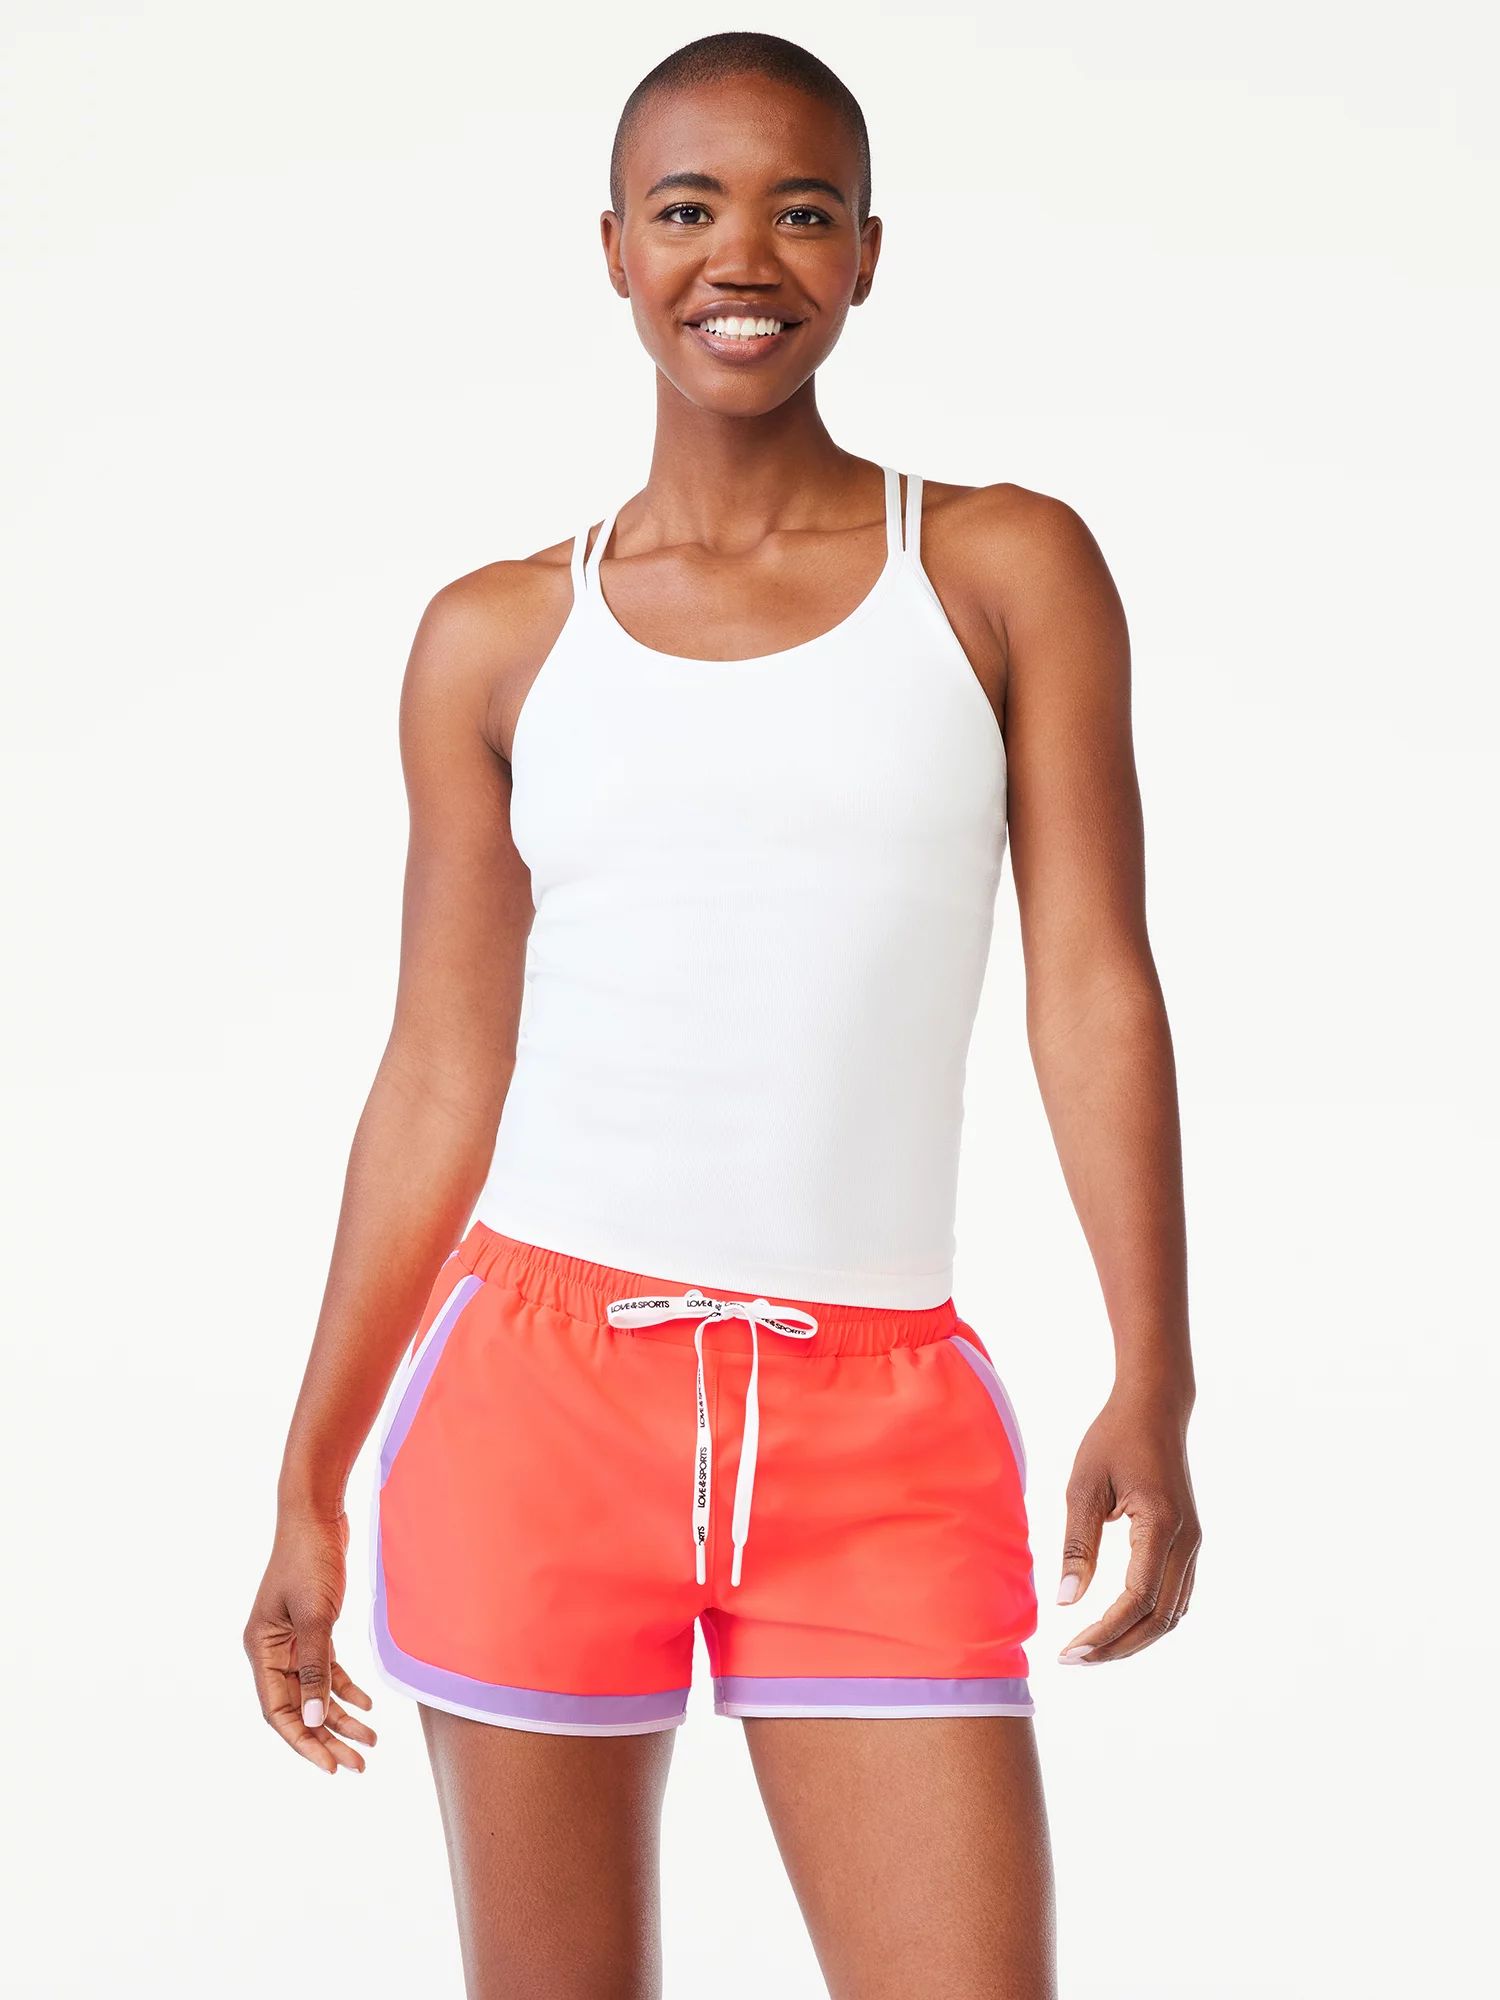 Love & SportsLove & Sports Women's Seamless Cami Tank Top, Sizes XS-2XLUSD$20.00Price when purcha... | Walmart (US)